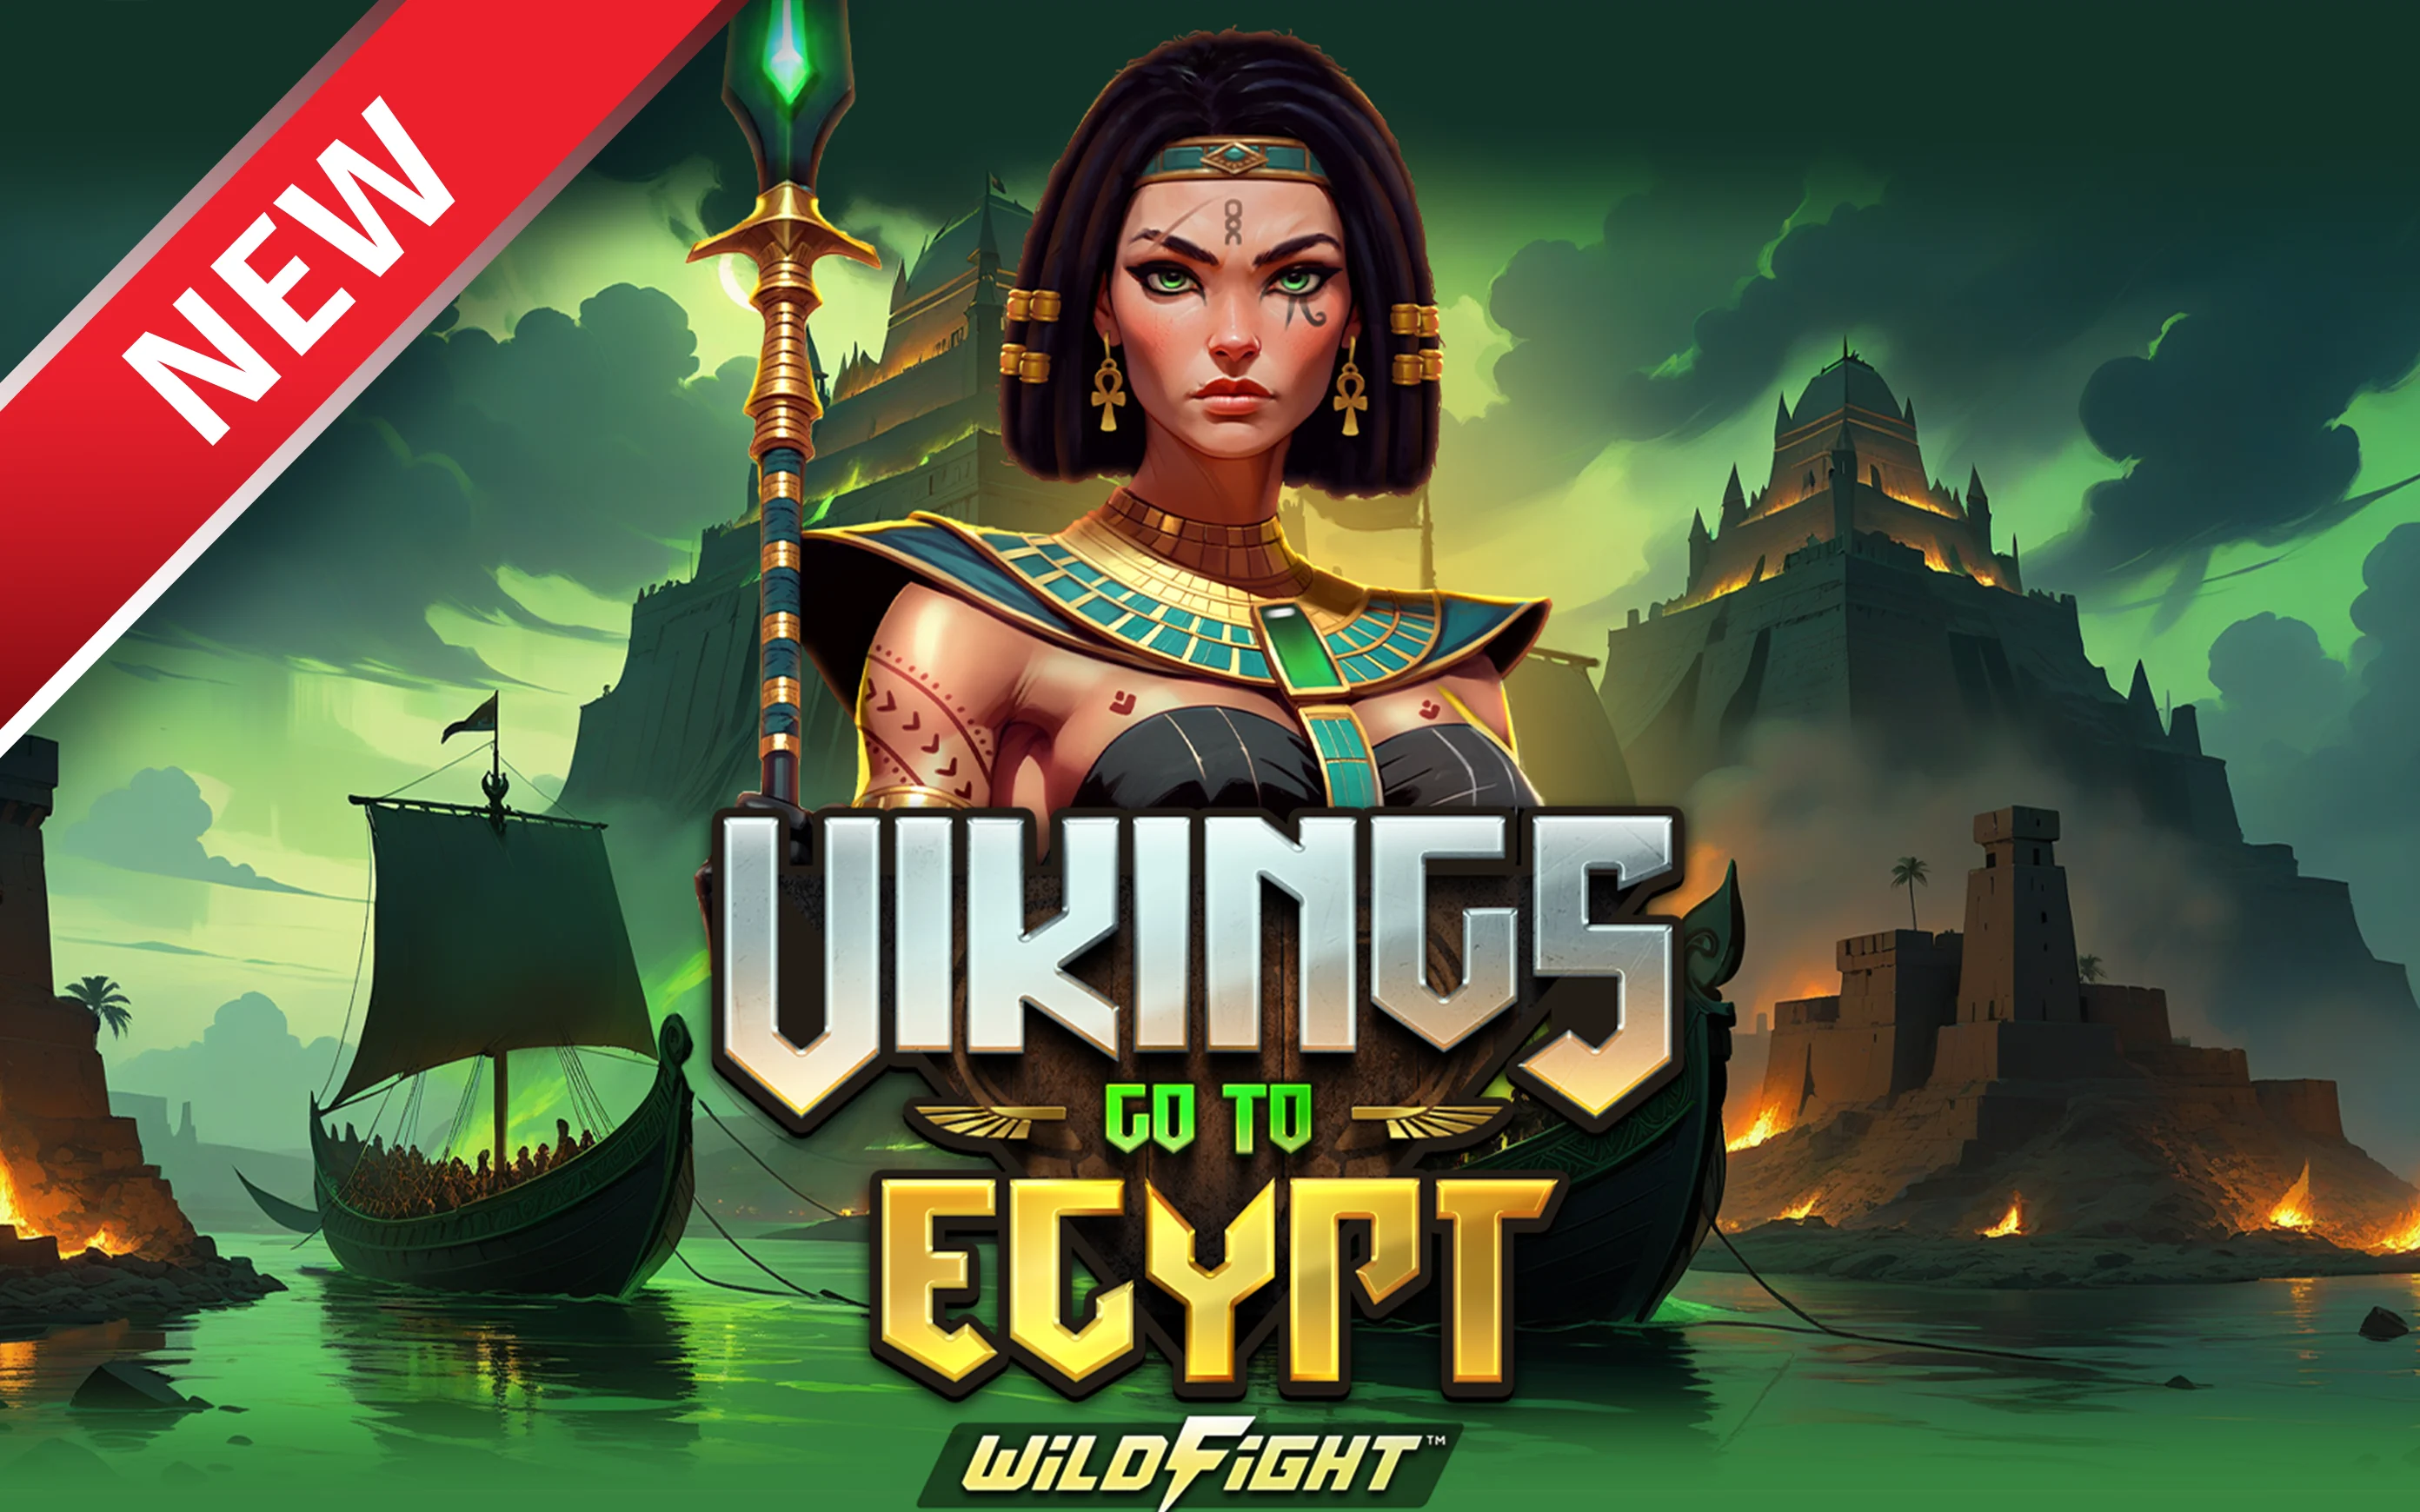 Juega a Vikings Go To Egypt Wild Fight!™ en el casino en línea de Starcasino.be